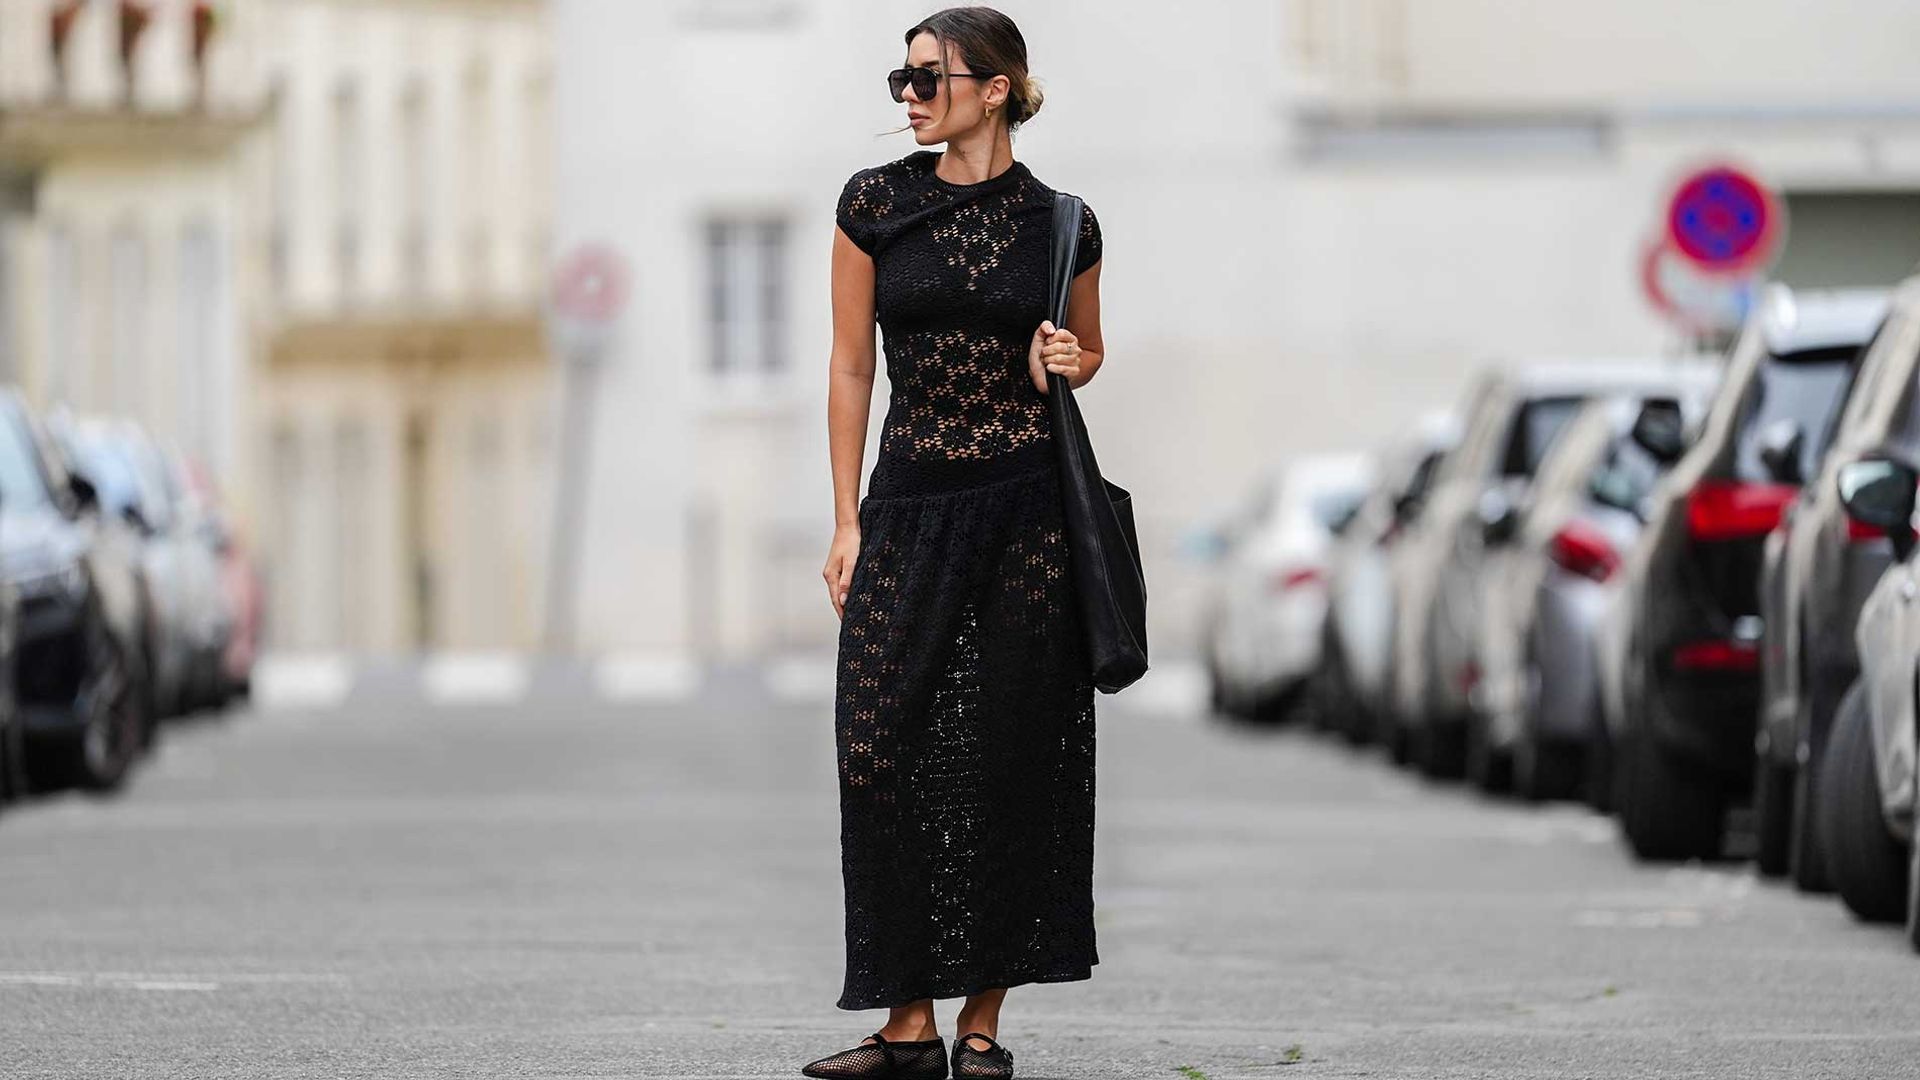 Katie Giorgadze wearing a black dress in Paris